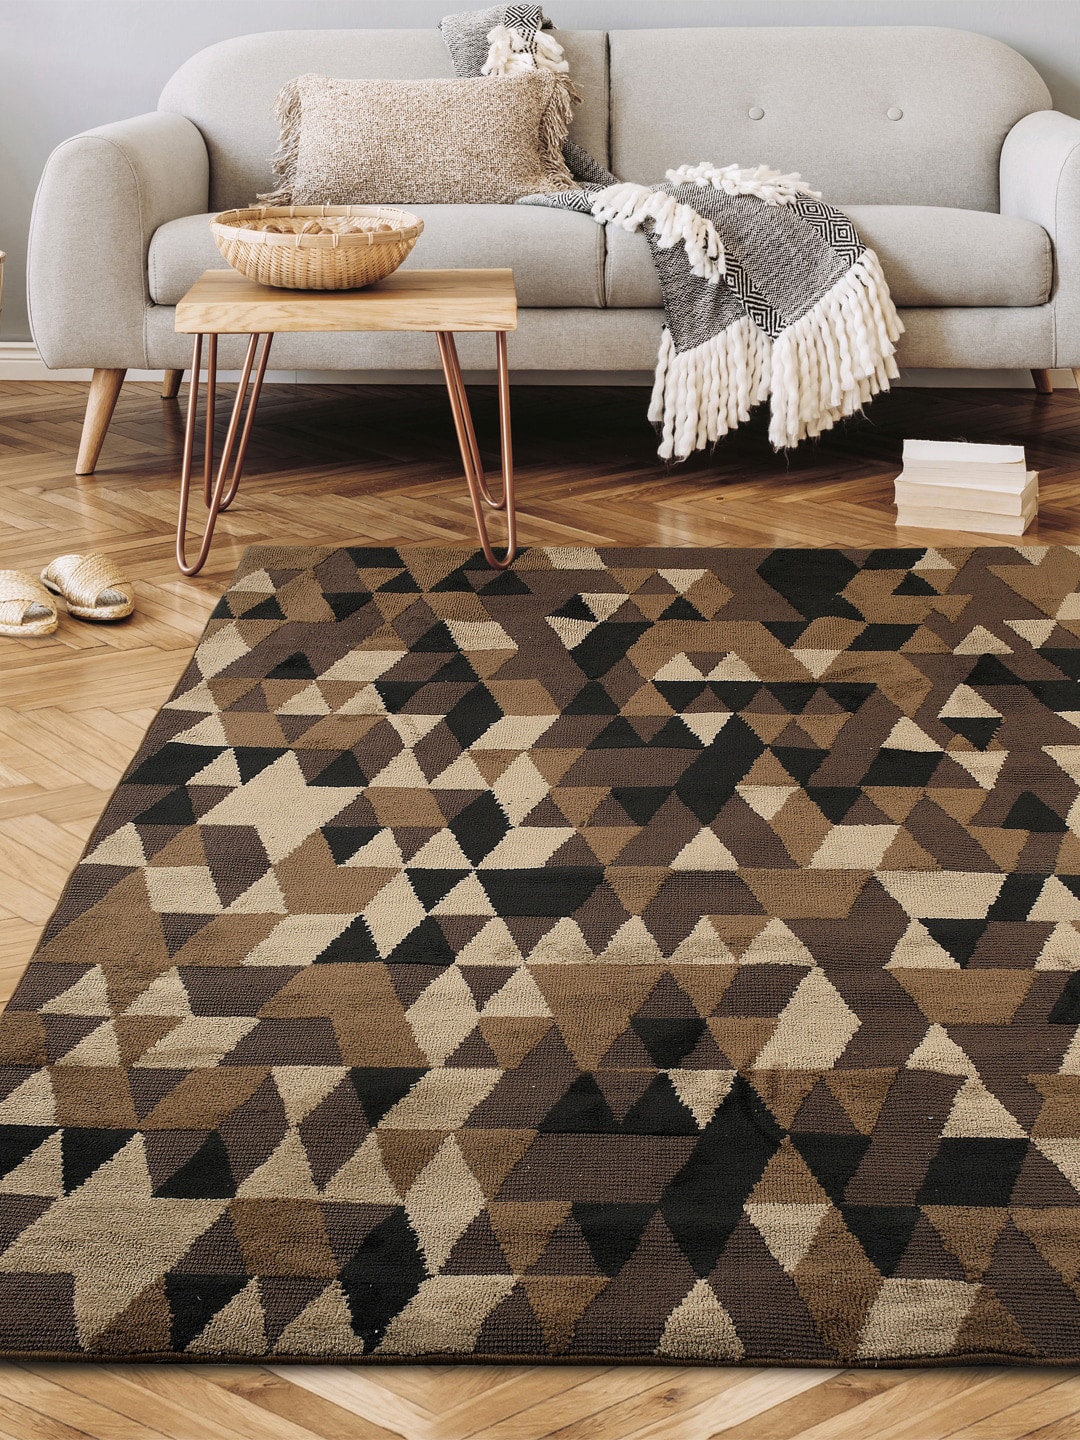 Saral Home Brown & Black Self-Design Cotton Carpet Price in India